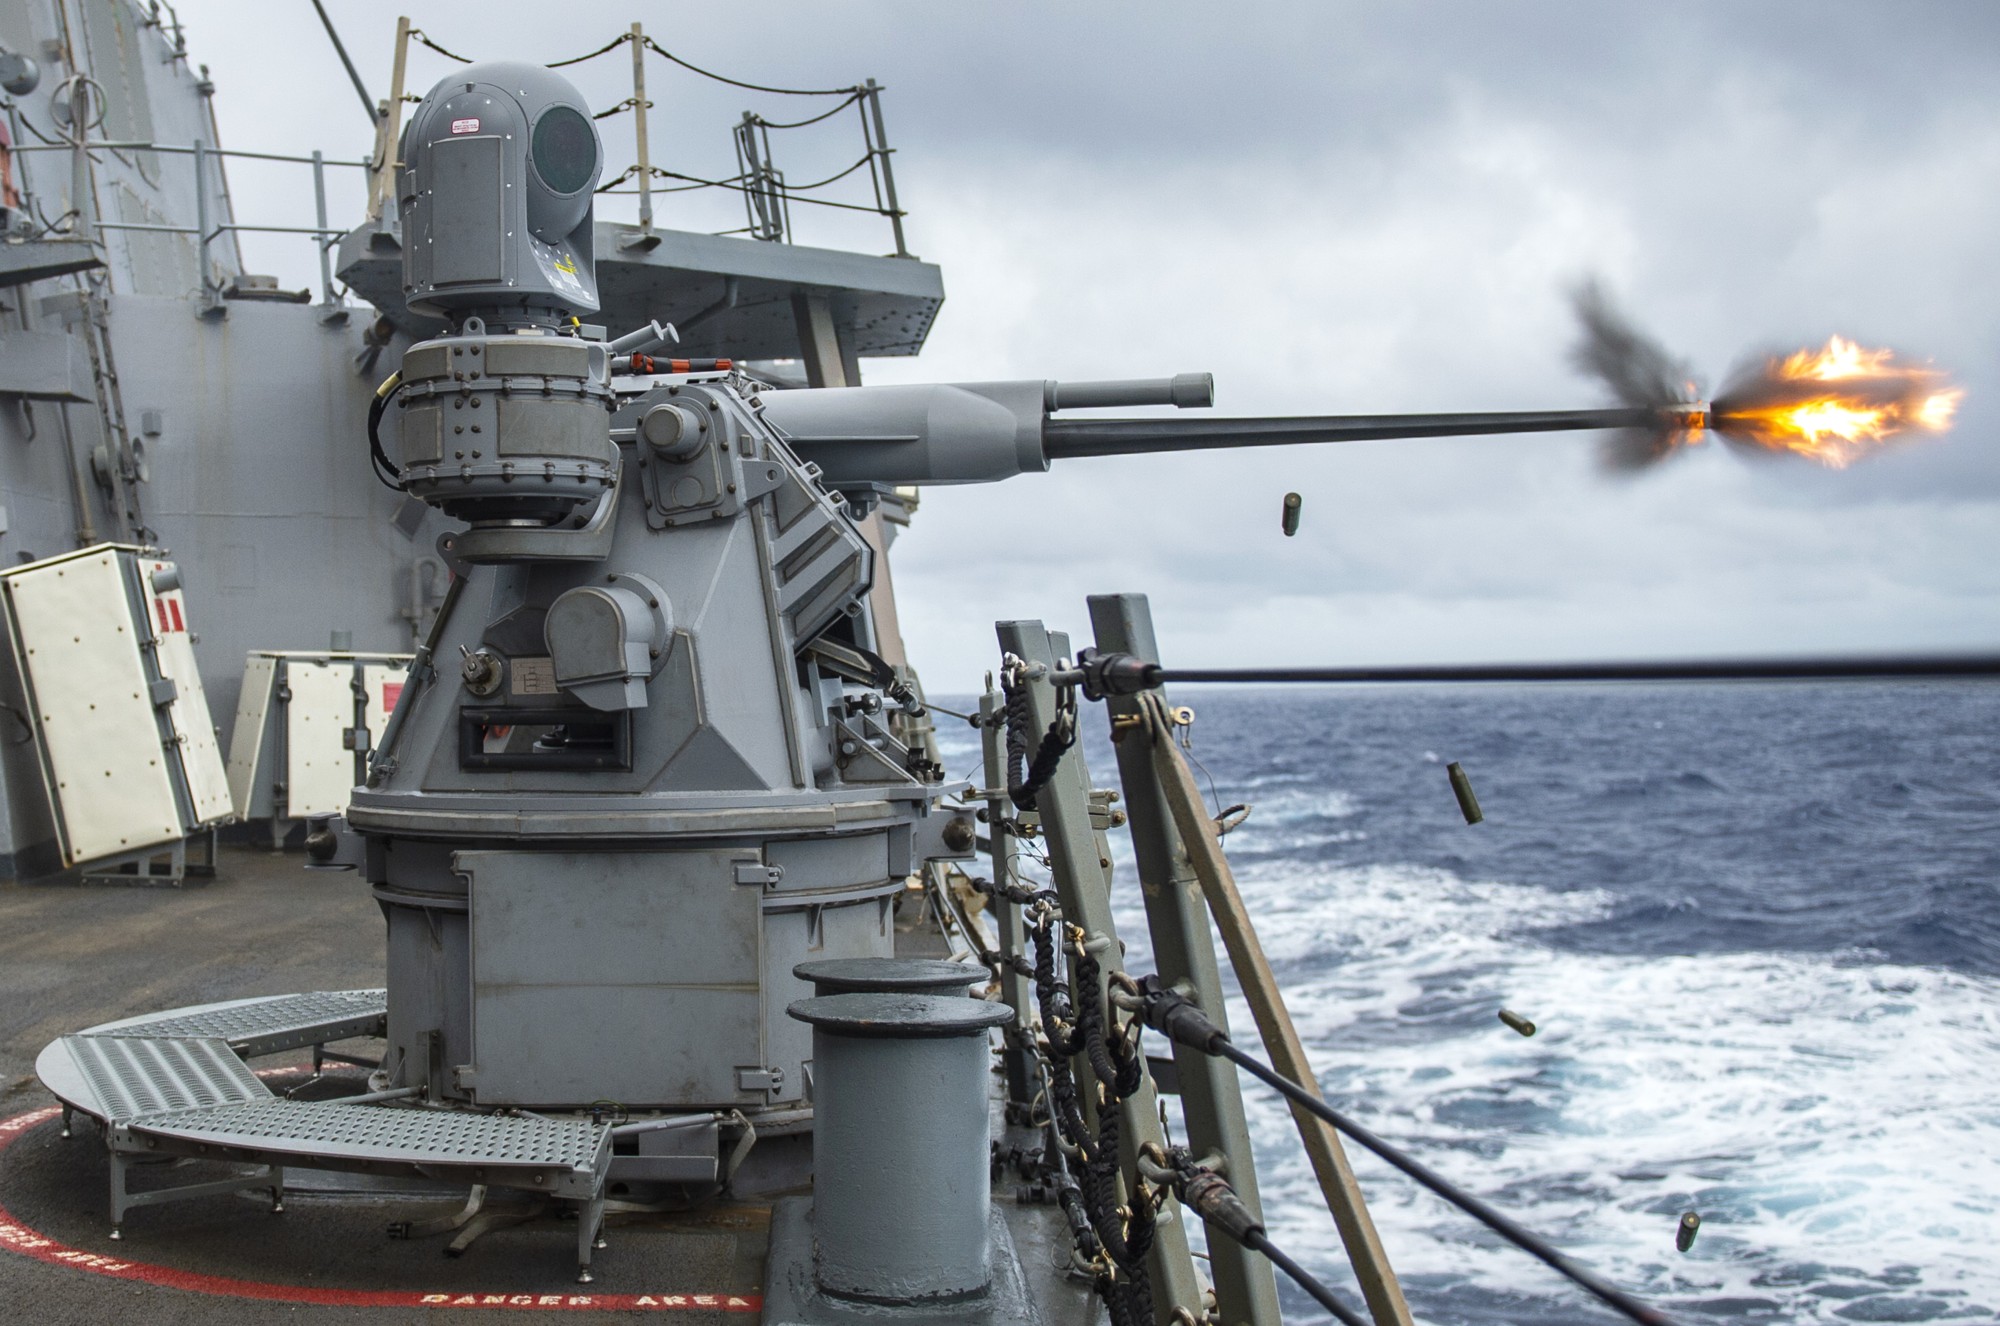 ddg-61 uss ramage guided missile destroyer arleigh burke class aegis us navy mk.38 mod.2 machine gun system 97